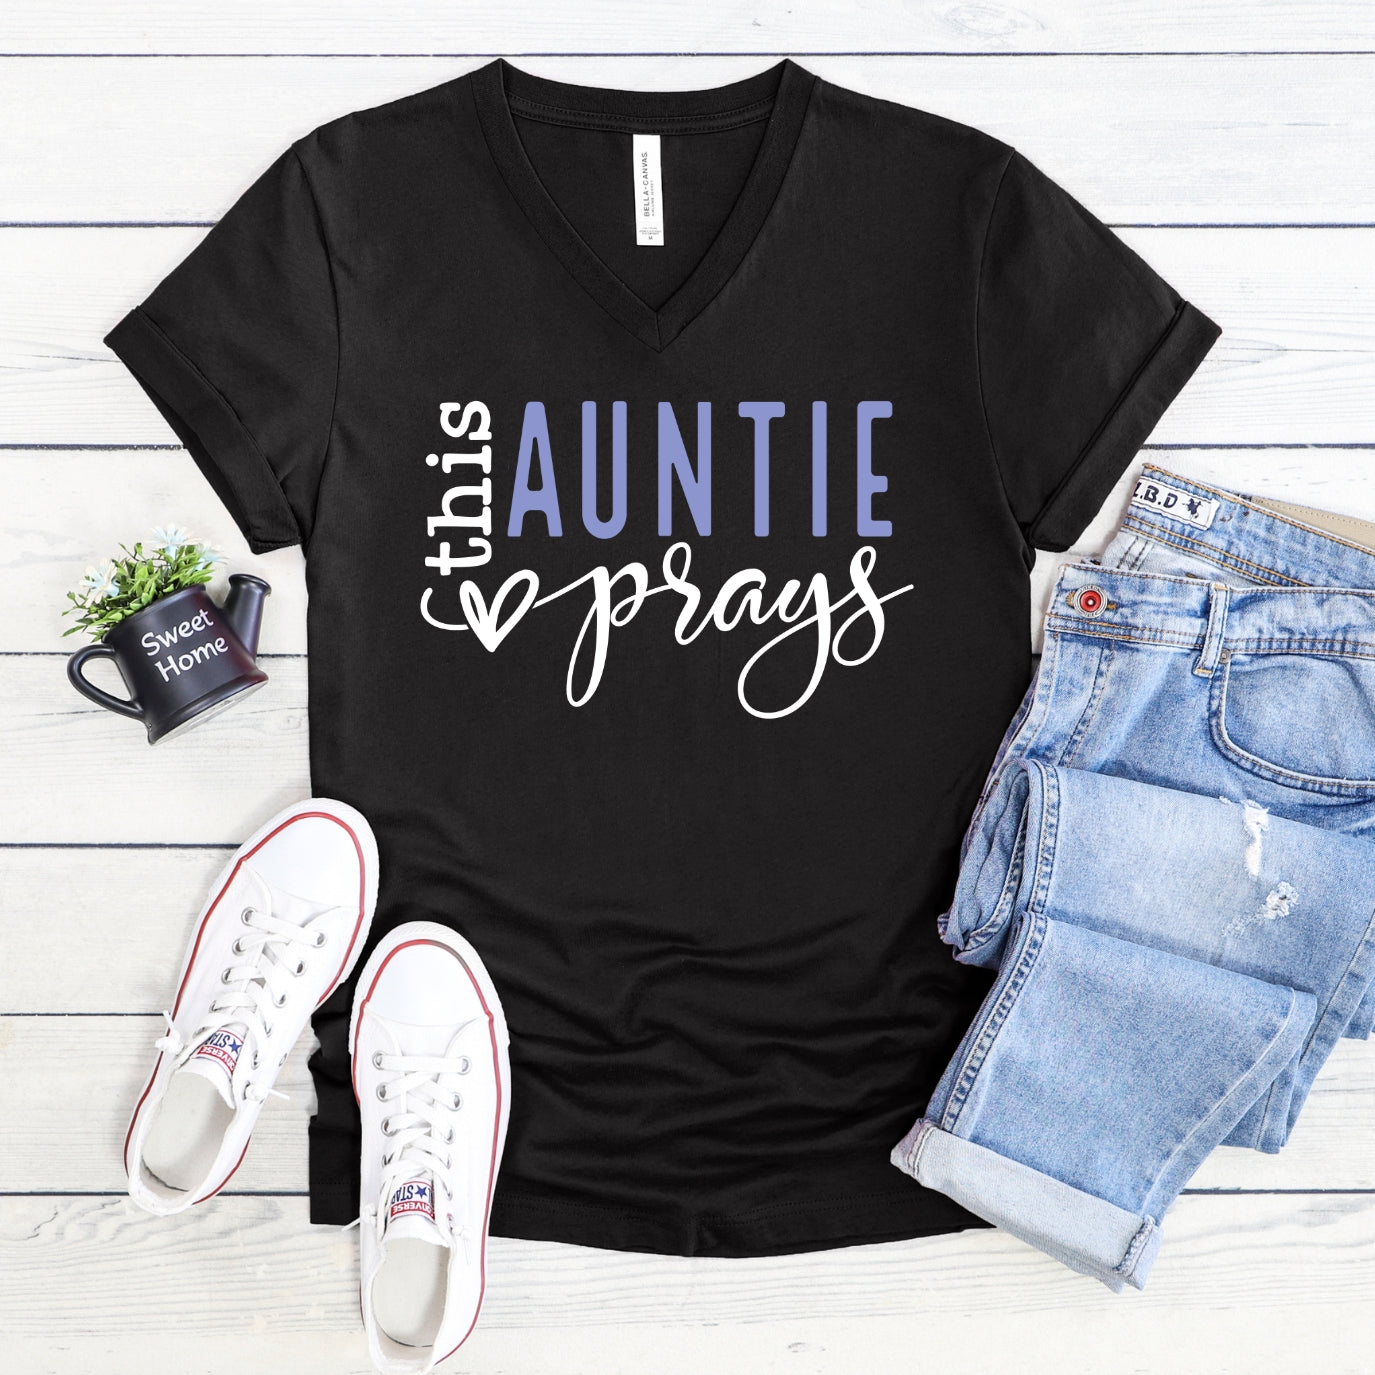 This Auntie Prays Women's V-Neck Shirt